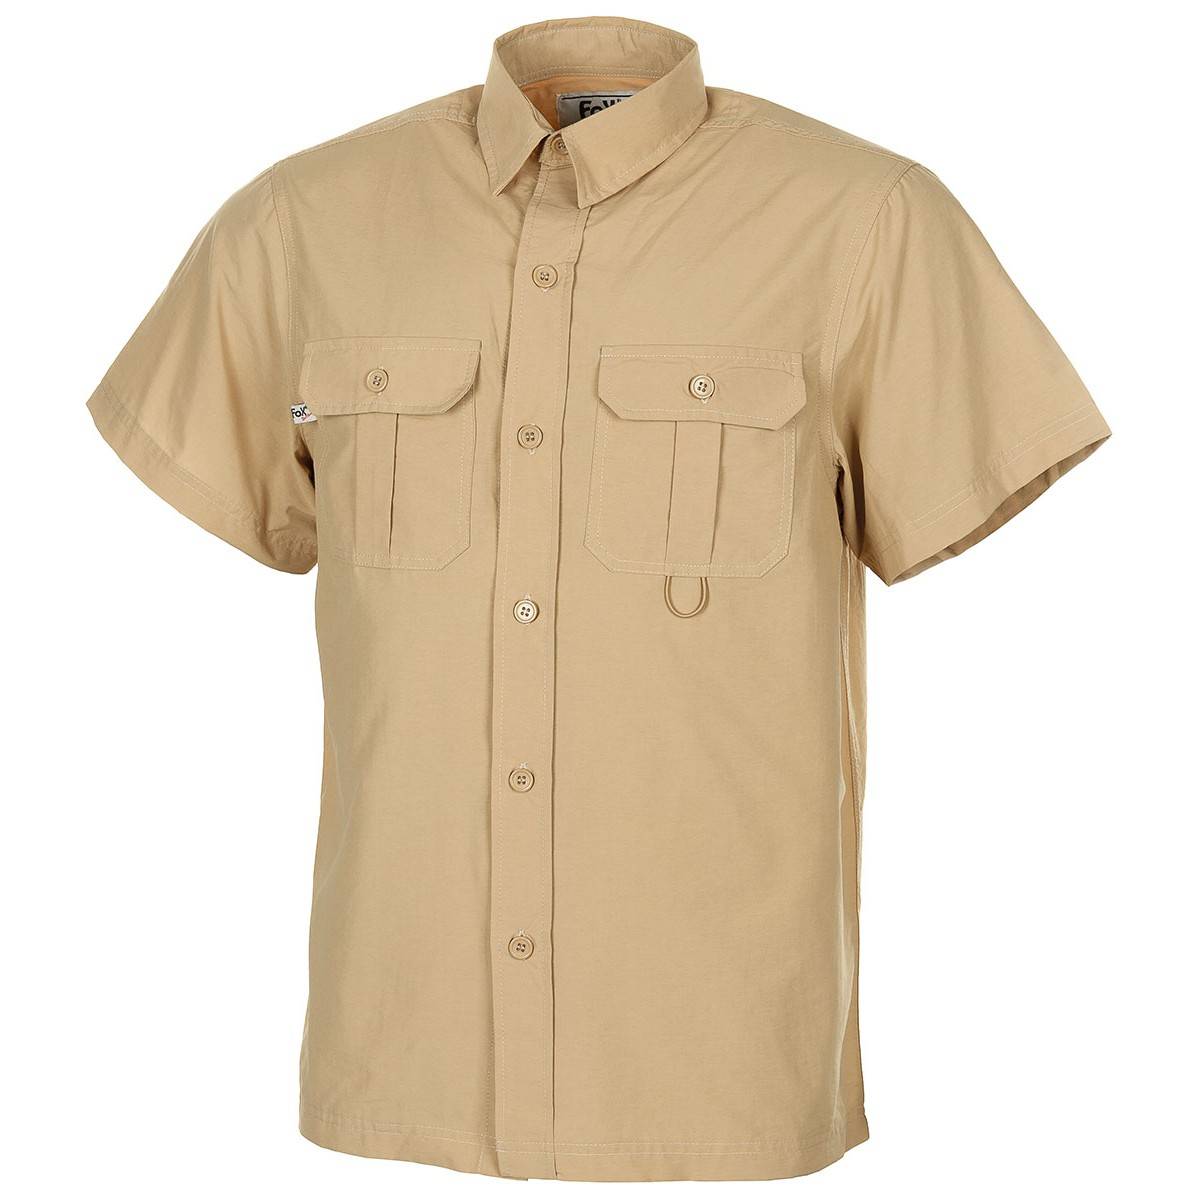 Outdoor Shirt, short sleeves, Khaki